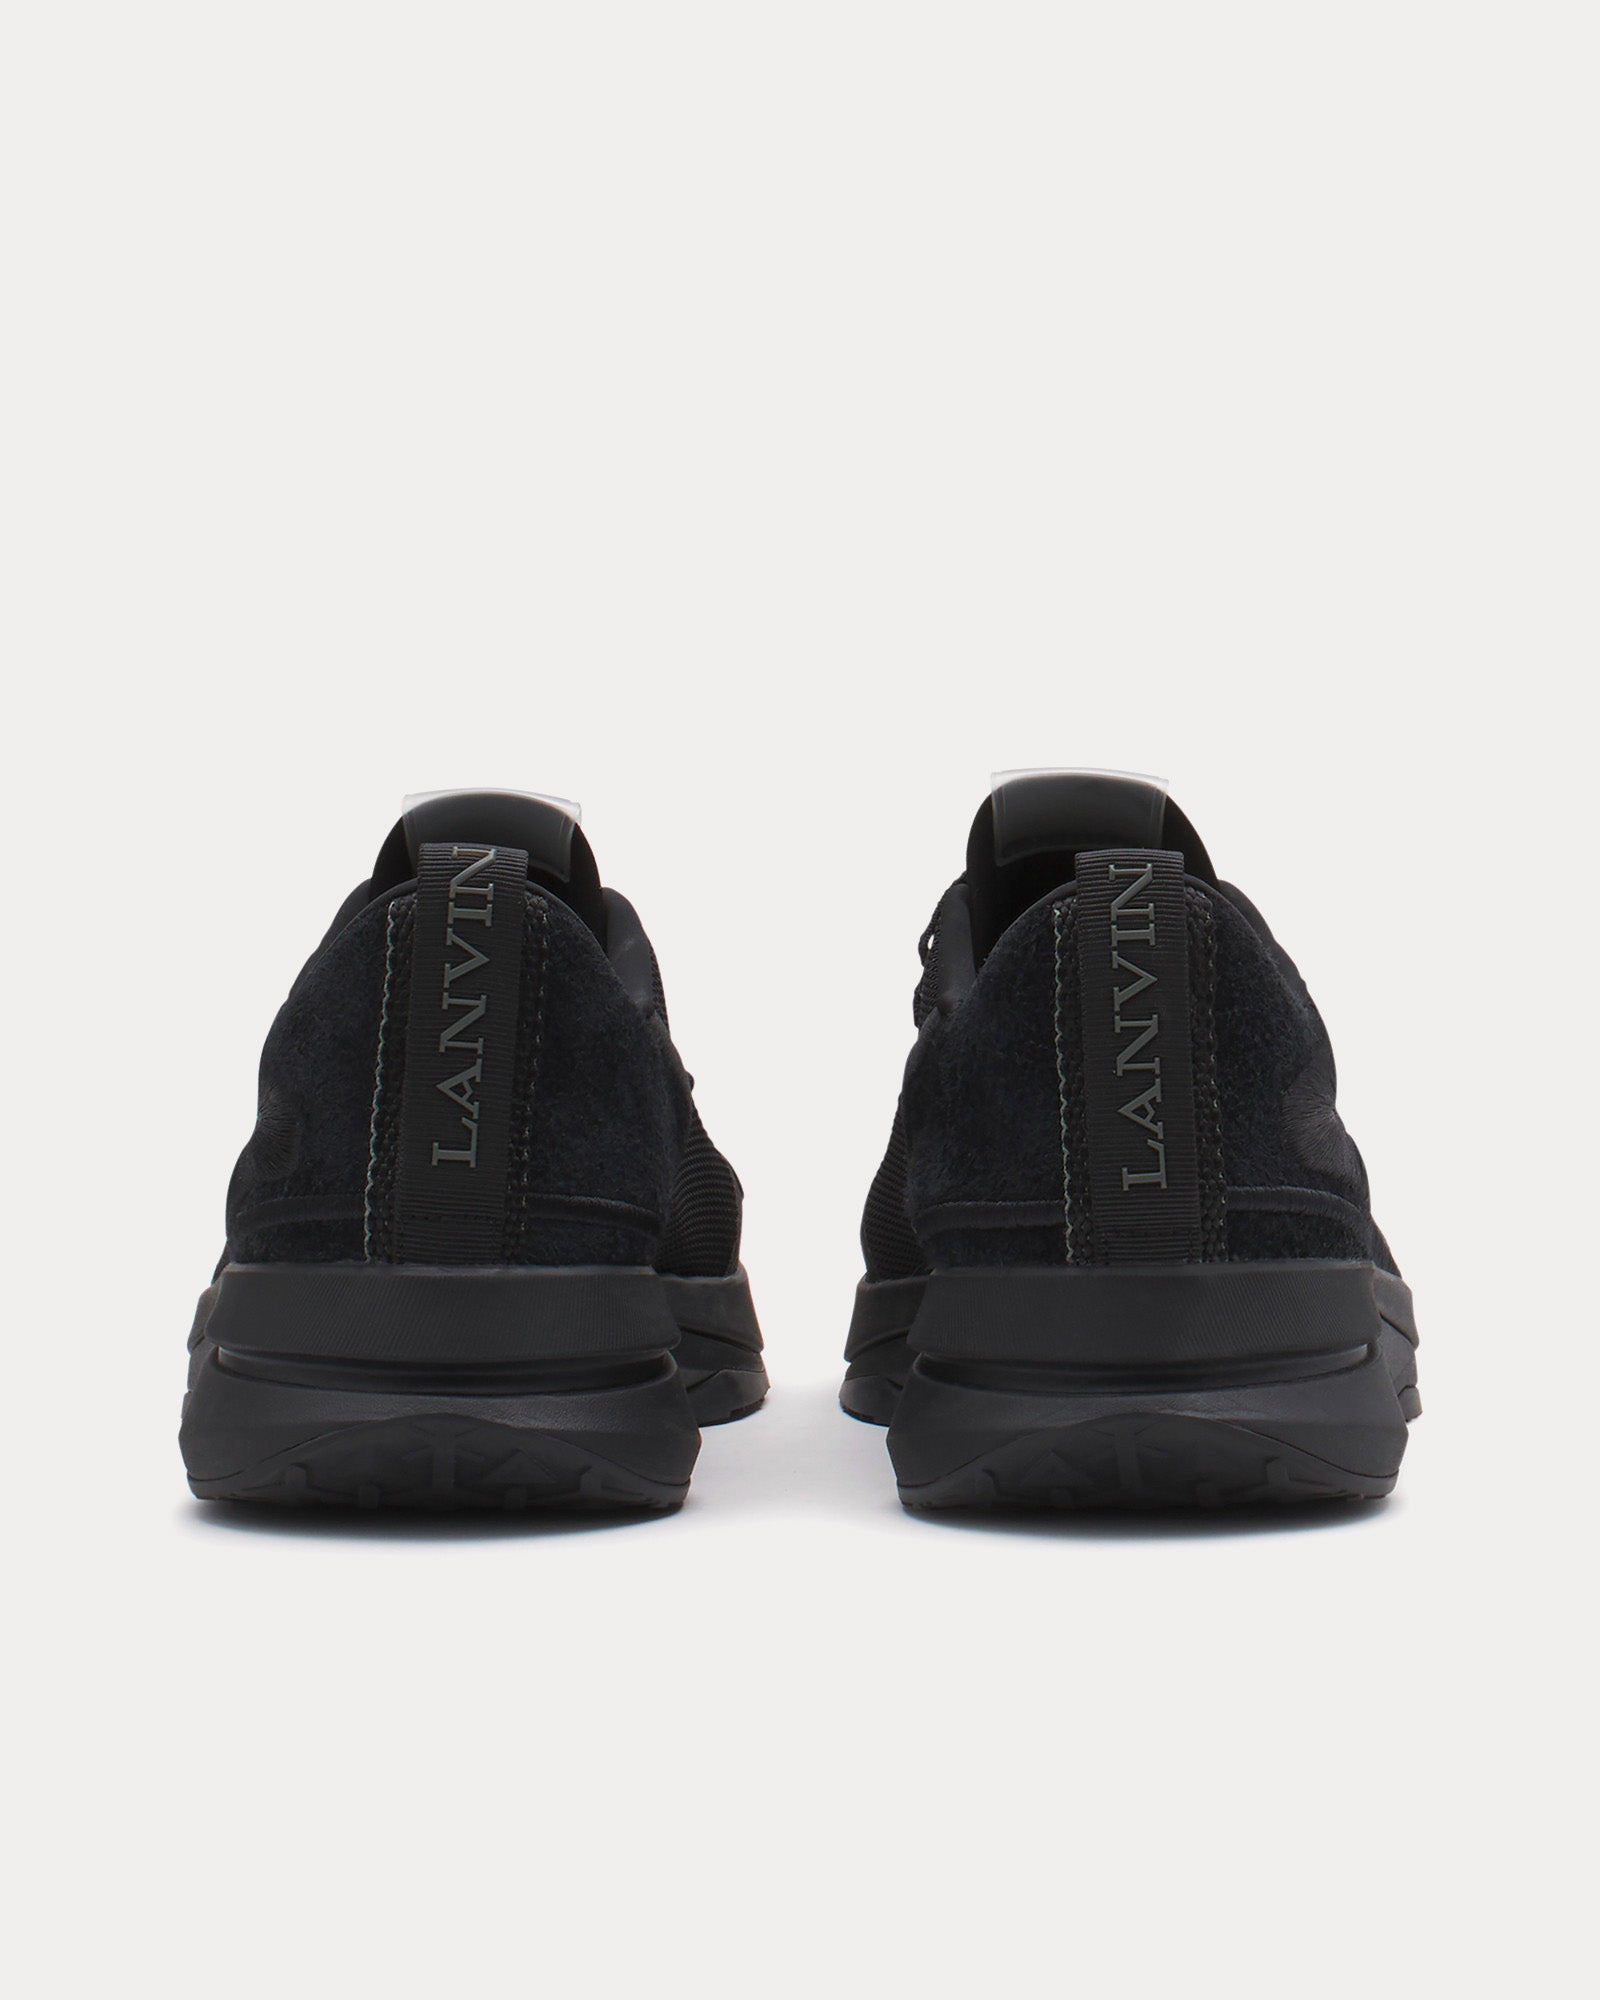 Lanvin - L-I Mesh Black / Black Low Top Sneakers